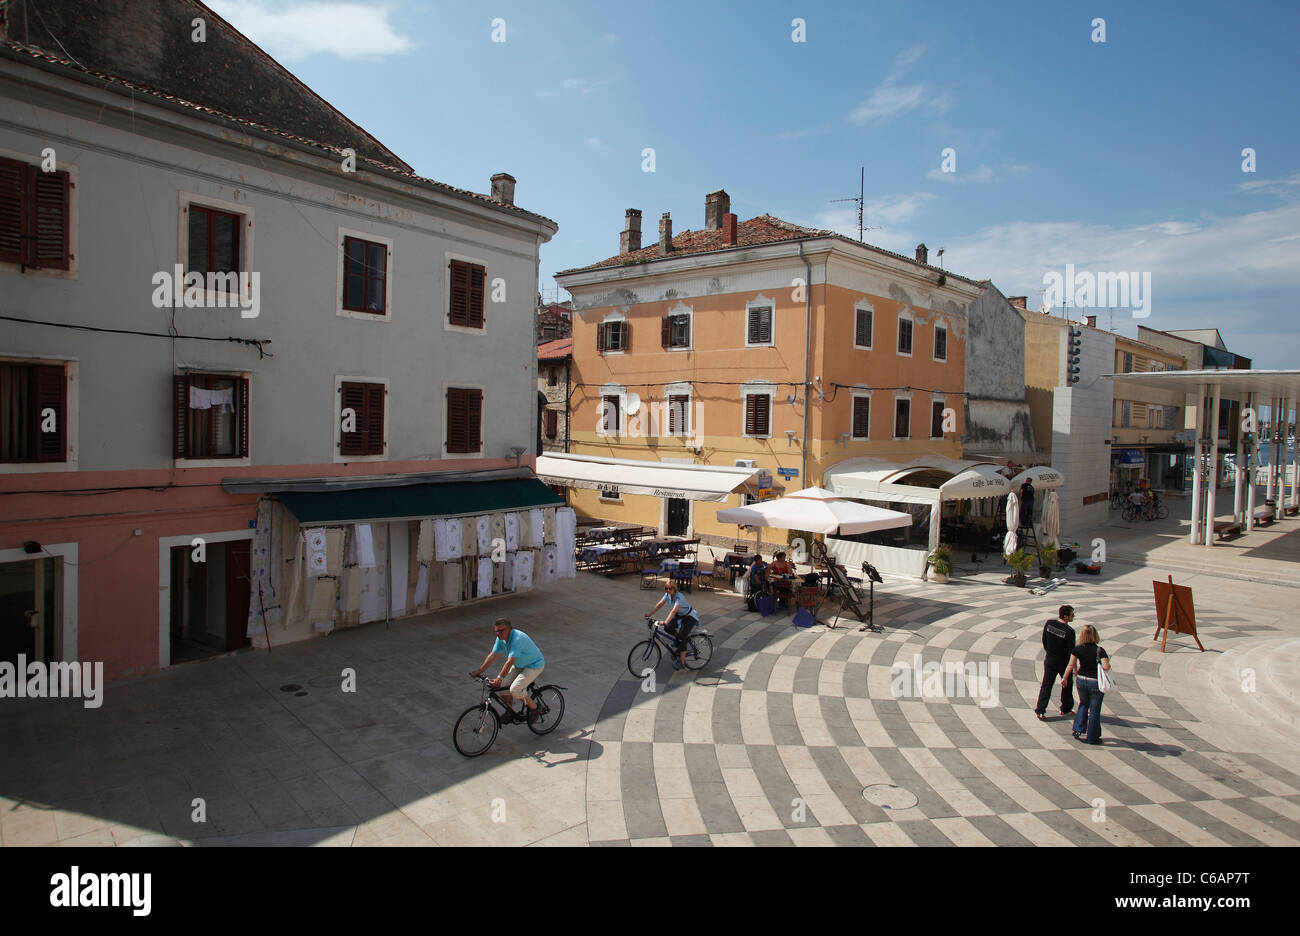 Piazza Slobode Liberta in Umag,Croatia. Stock Photo